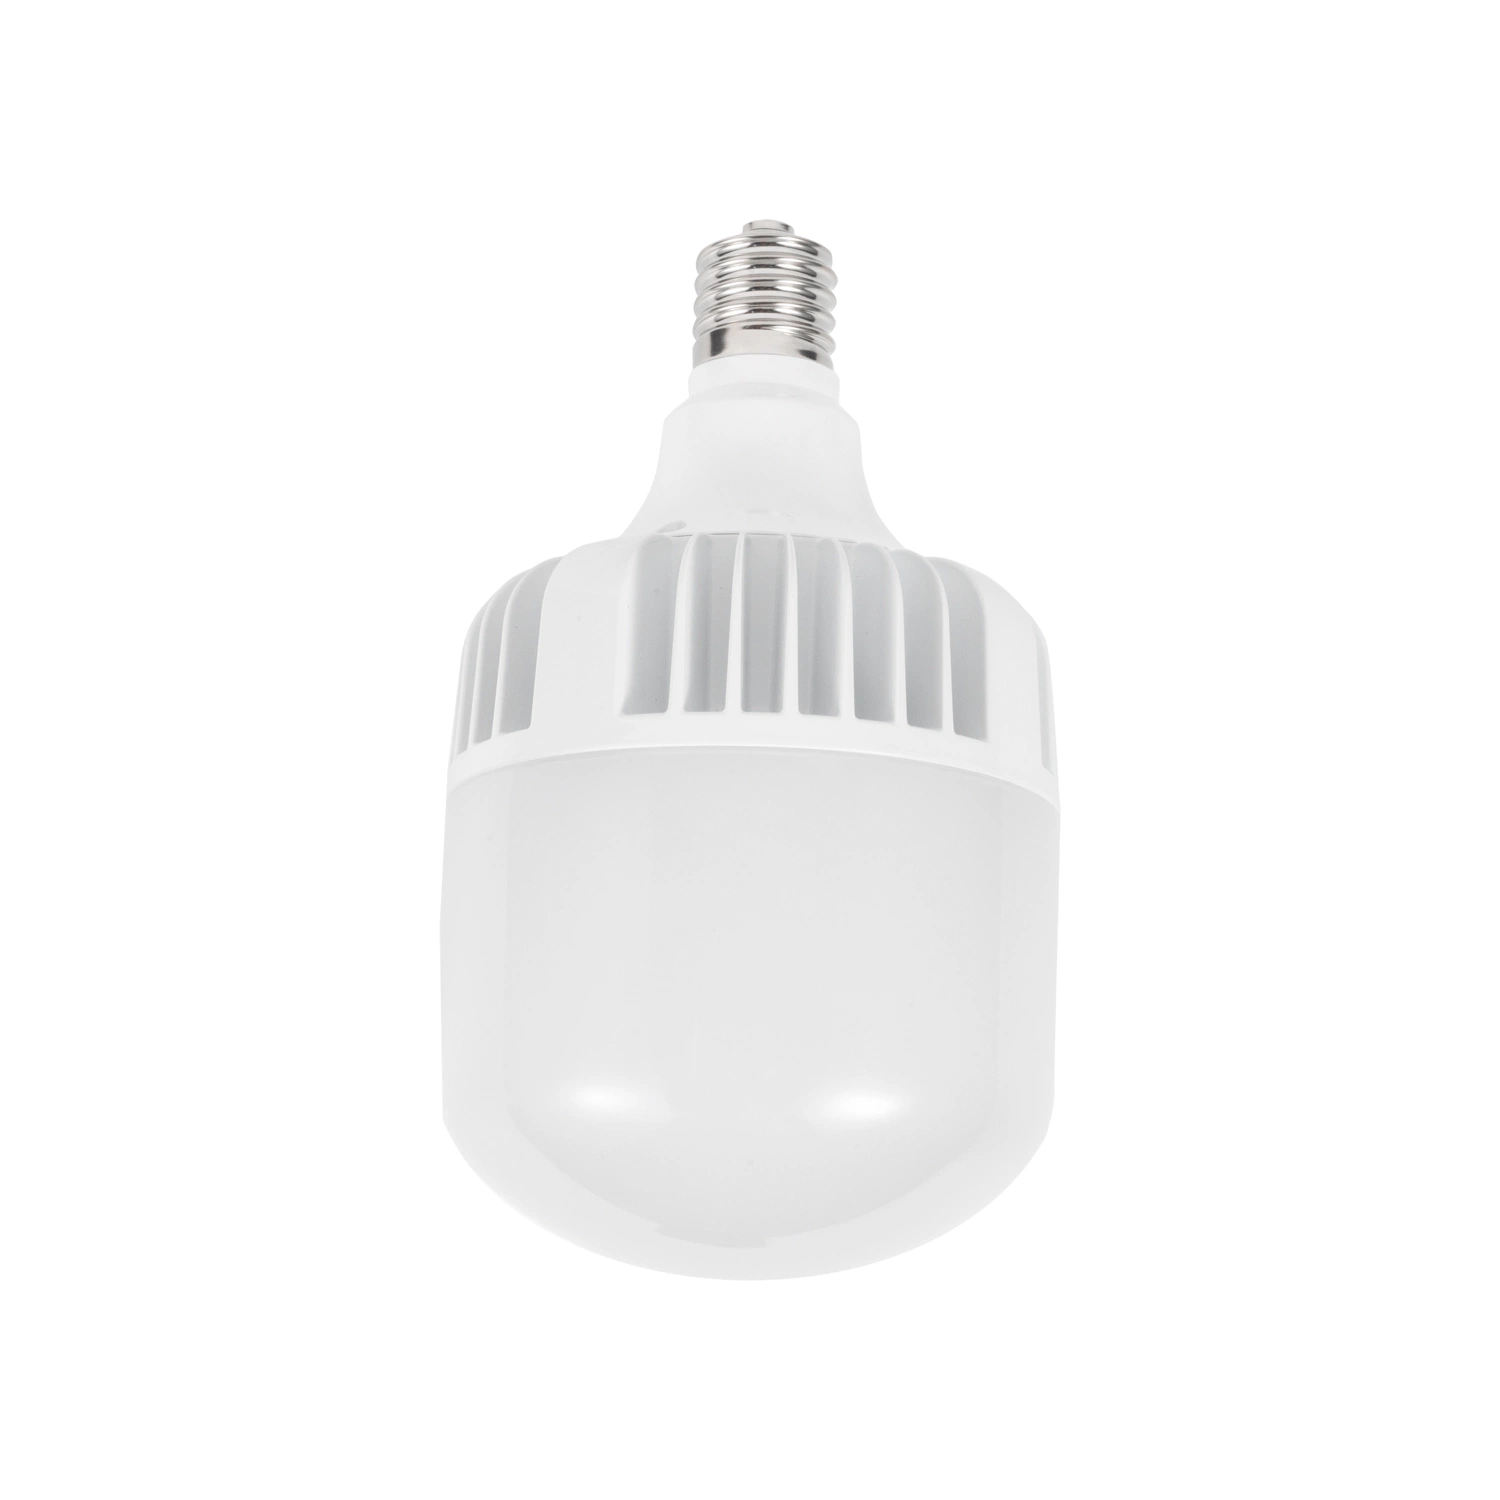 China Hersteller High Power 20W-100W T Bulb 2835 SMD LED Lampe Glühlampe aus Vollaluminium oder Aluminium +PC